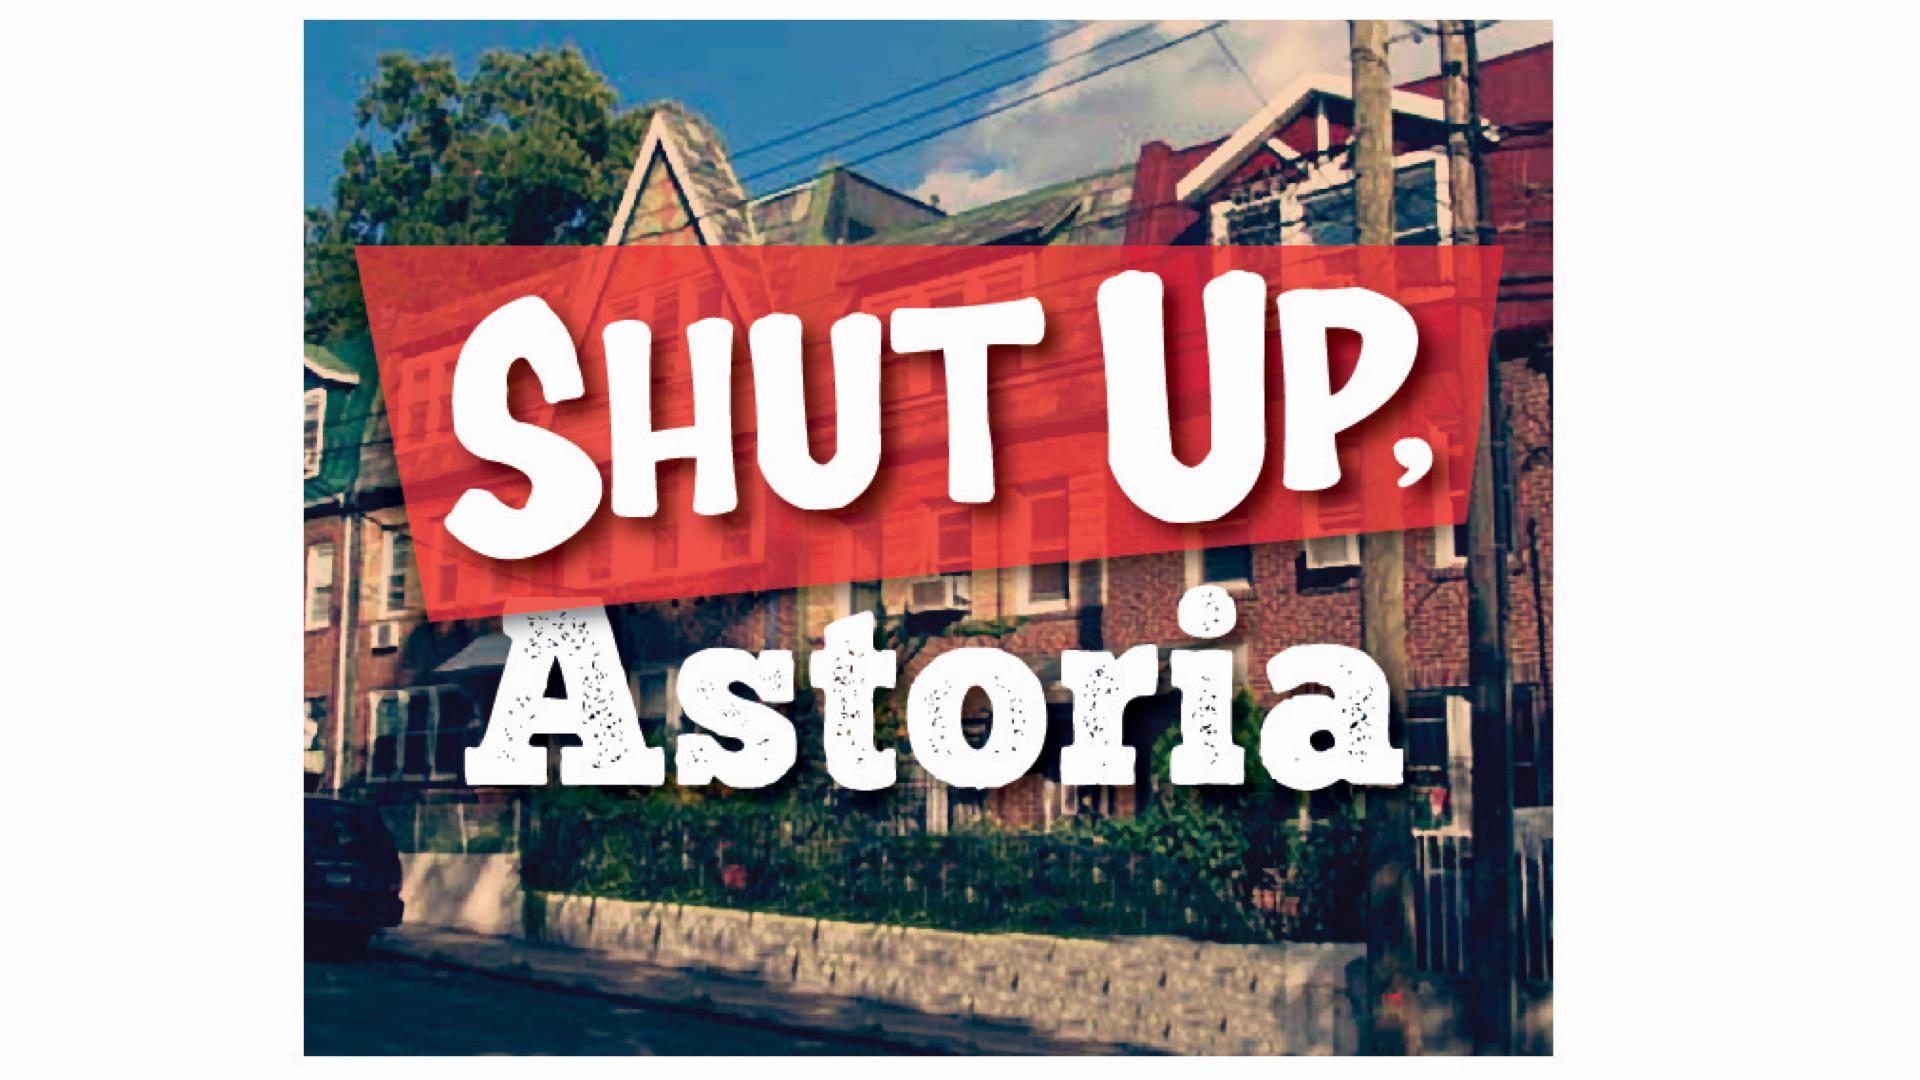 Shut Up, Astoria